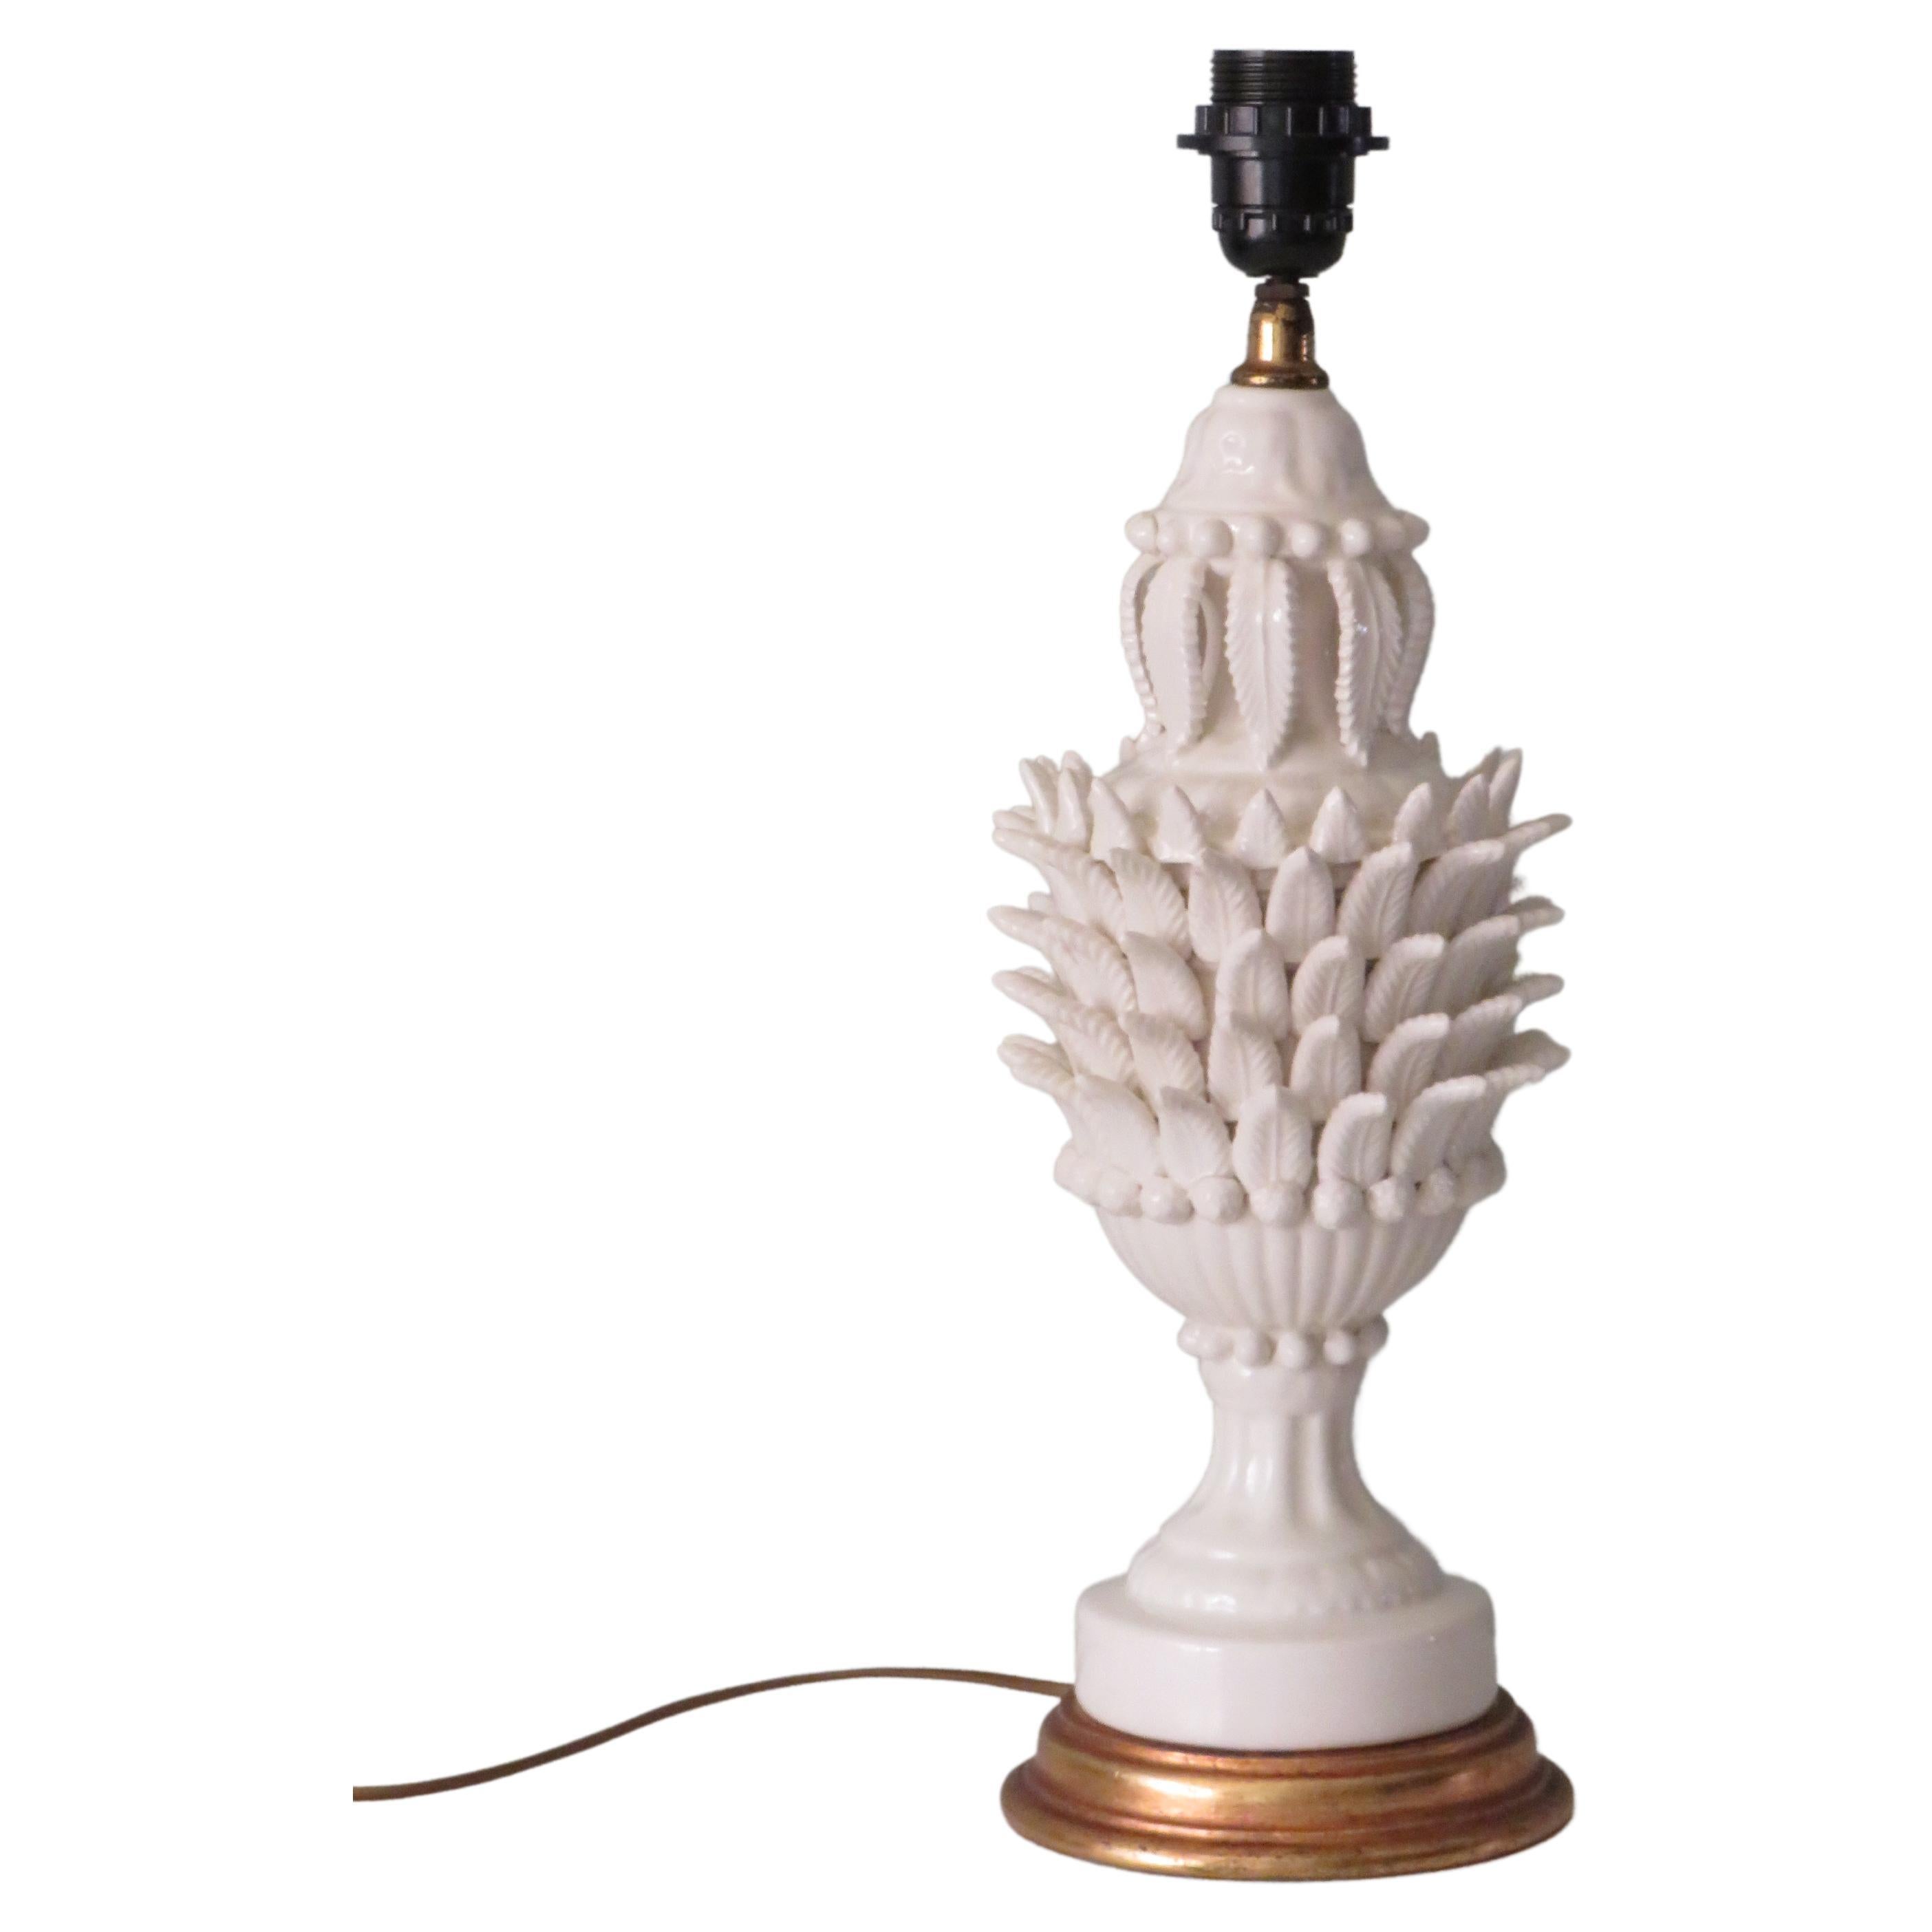 Bondia Manises Lamp Base in White Ceramic, 1950s Spain